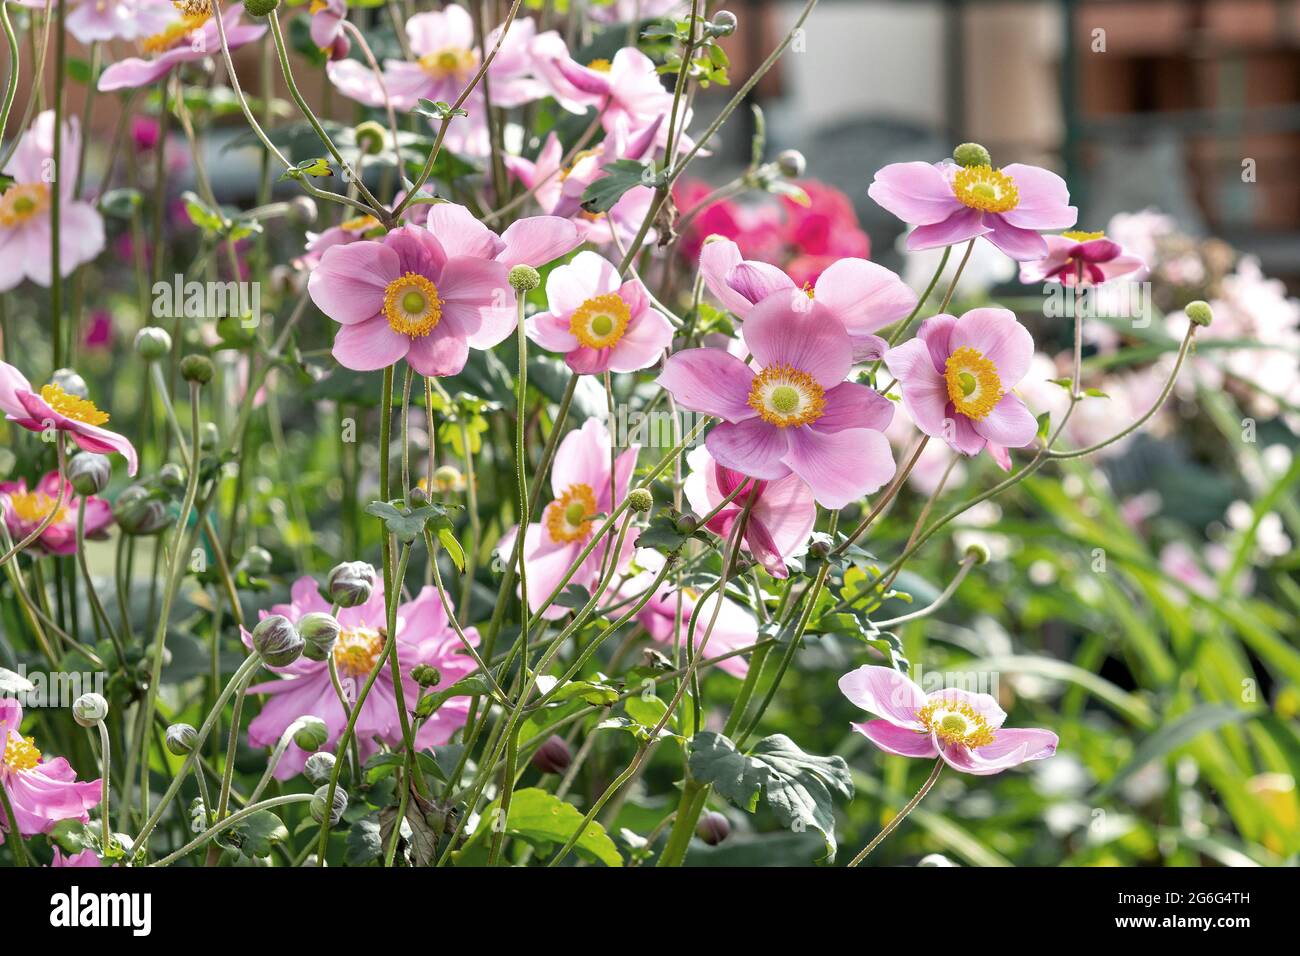 Anemone giapponese, fiore a vento giapponese, anemone cinese (Anemone hupehensis 'Spendens', Anemone hupehensis Splendens), fioritura, cultivar Splendens, Foto Stock